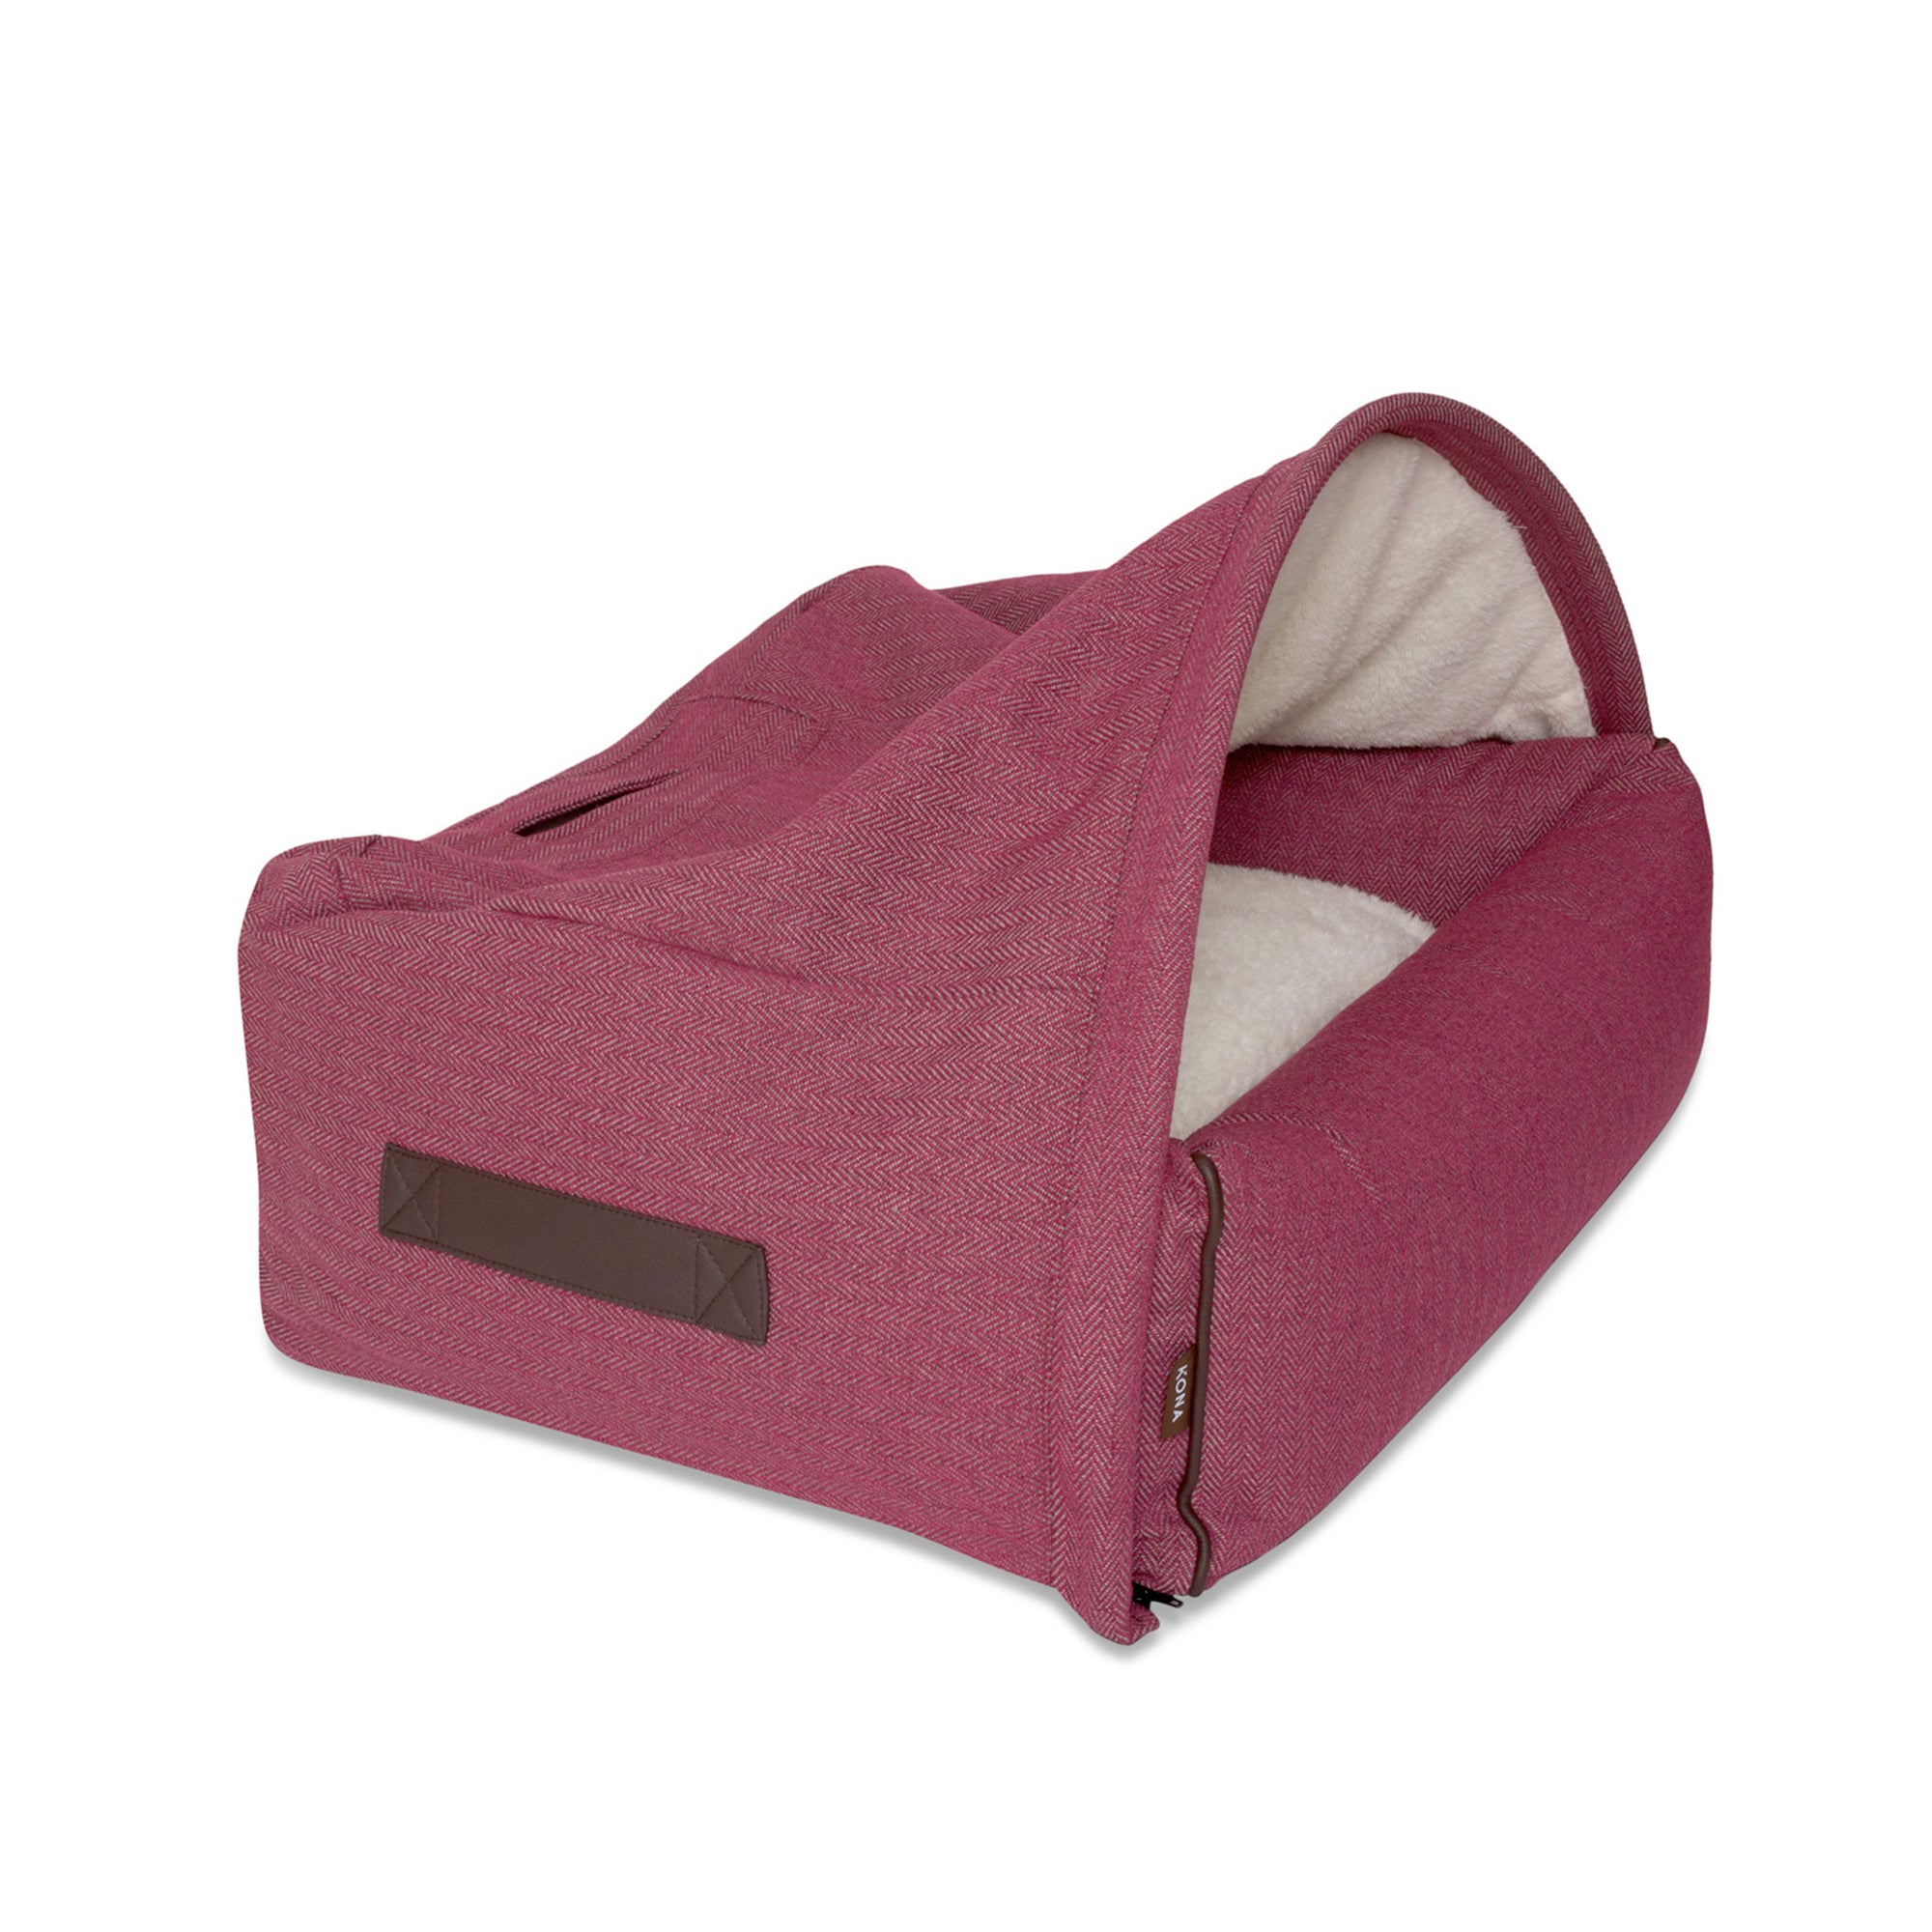 KONA CAVE® luxury Snuggle Cave dog bed in dark pink herringbone fabric for burrowing dogs.